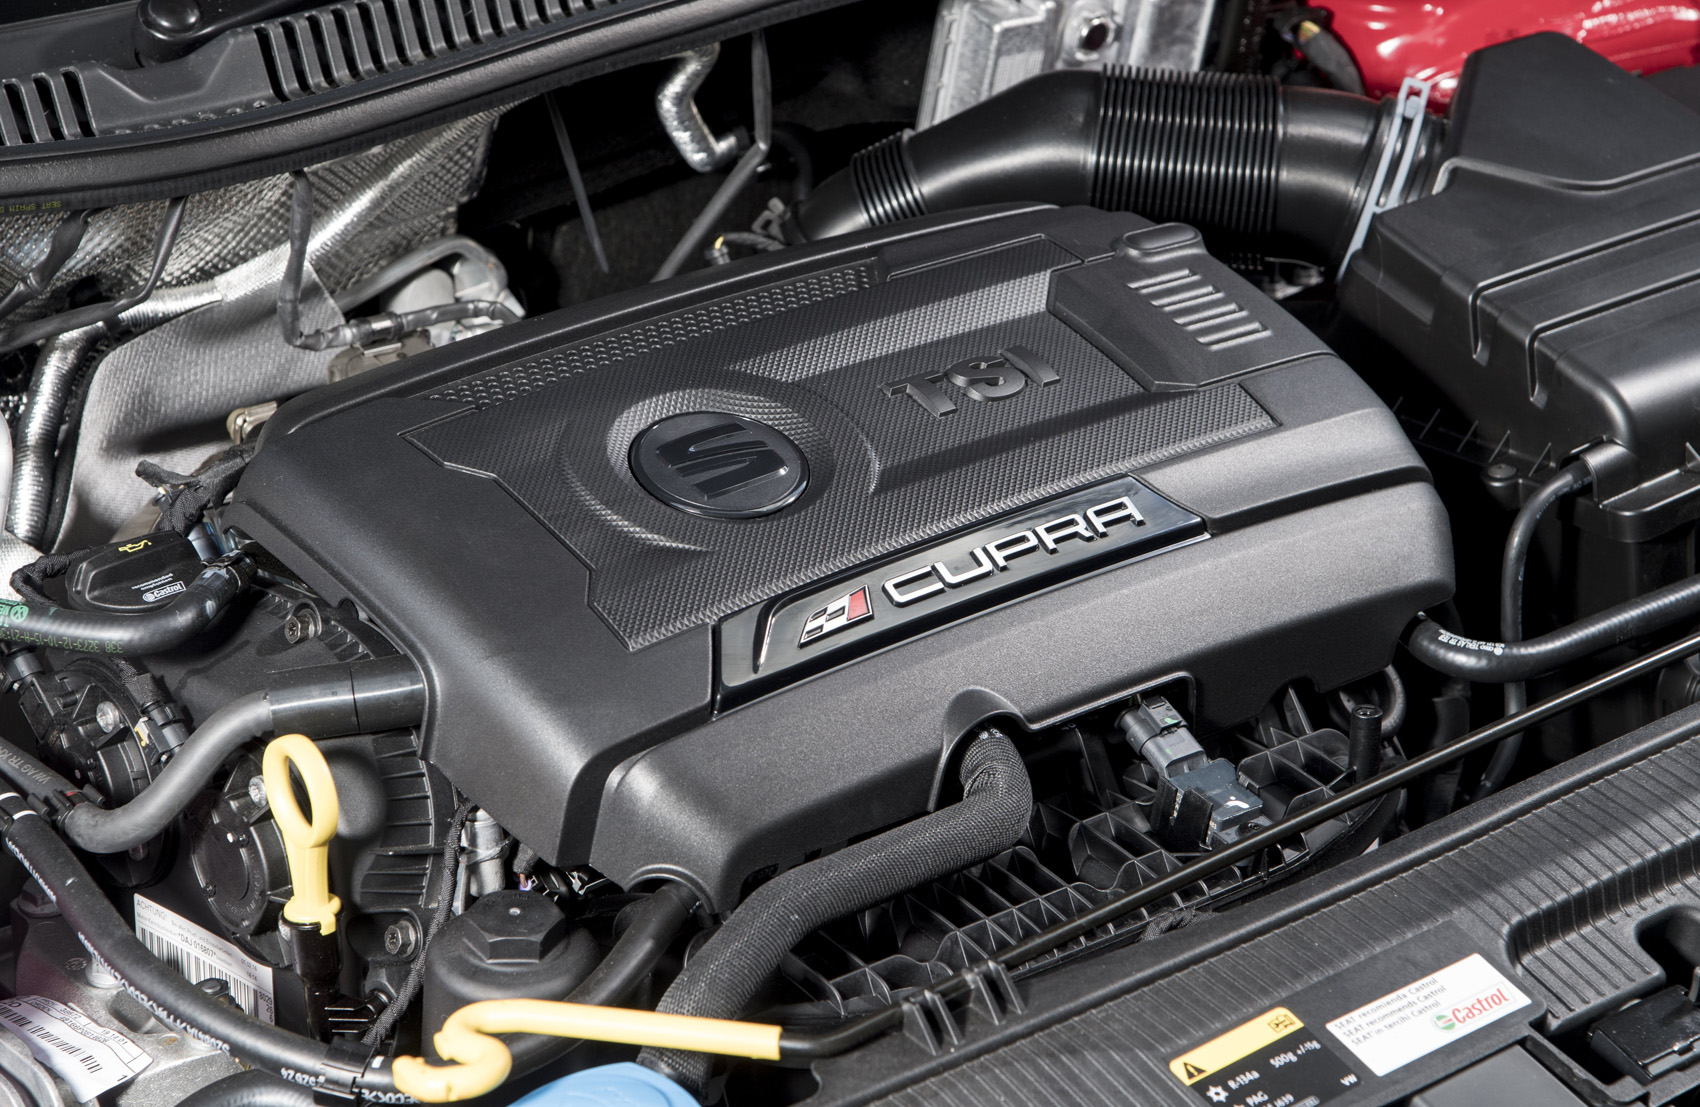 1.4-litre TSI Seat Ibiza Cupra engine